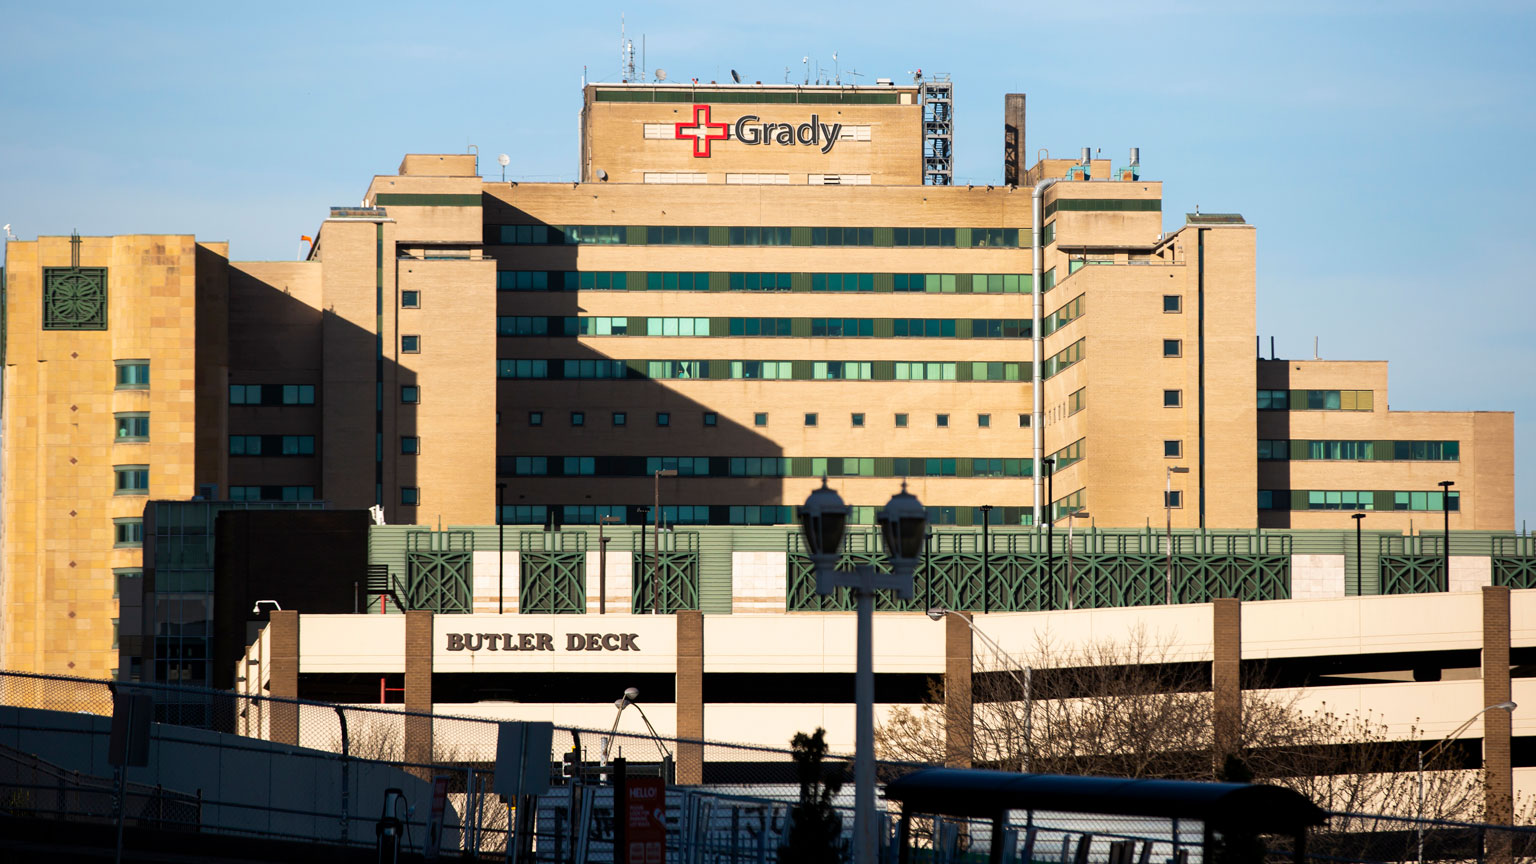 Grady Memorial Hospital